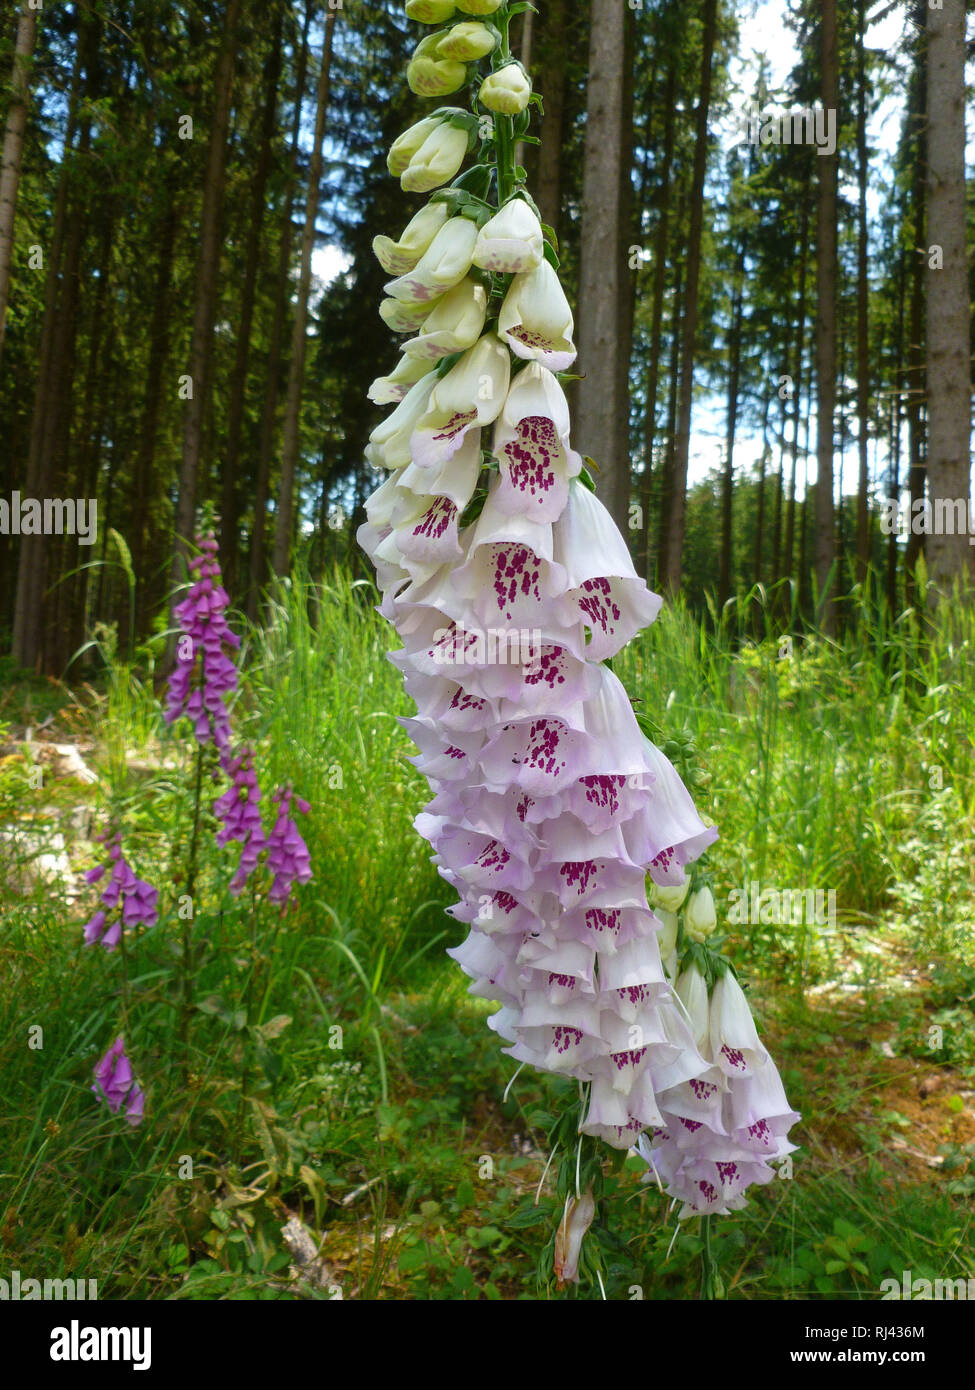 Deutschland, Oberbayern, Roter Fingerhut, Digitalis purpurea albiflora, Stock Photo